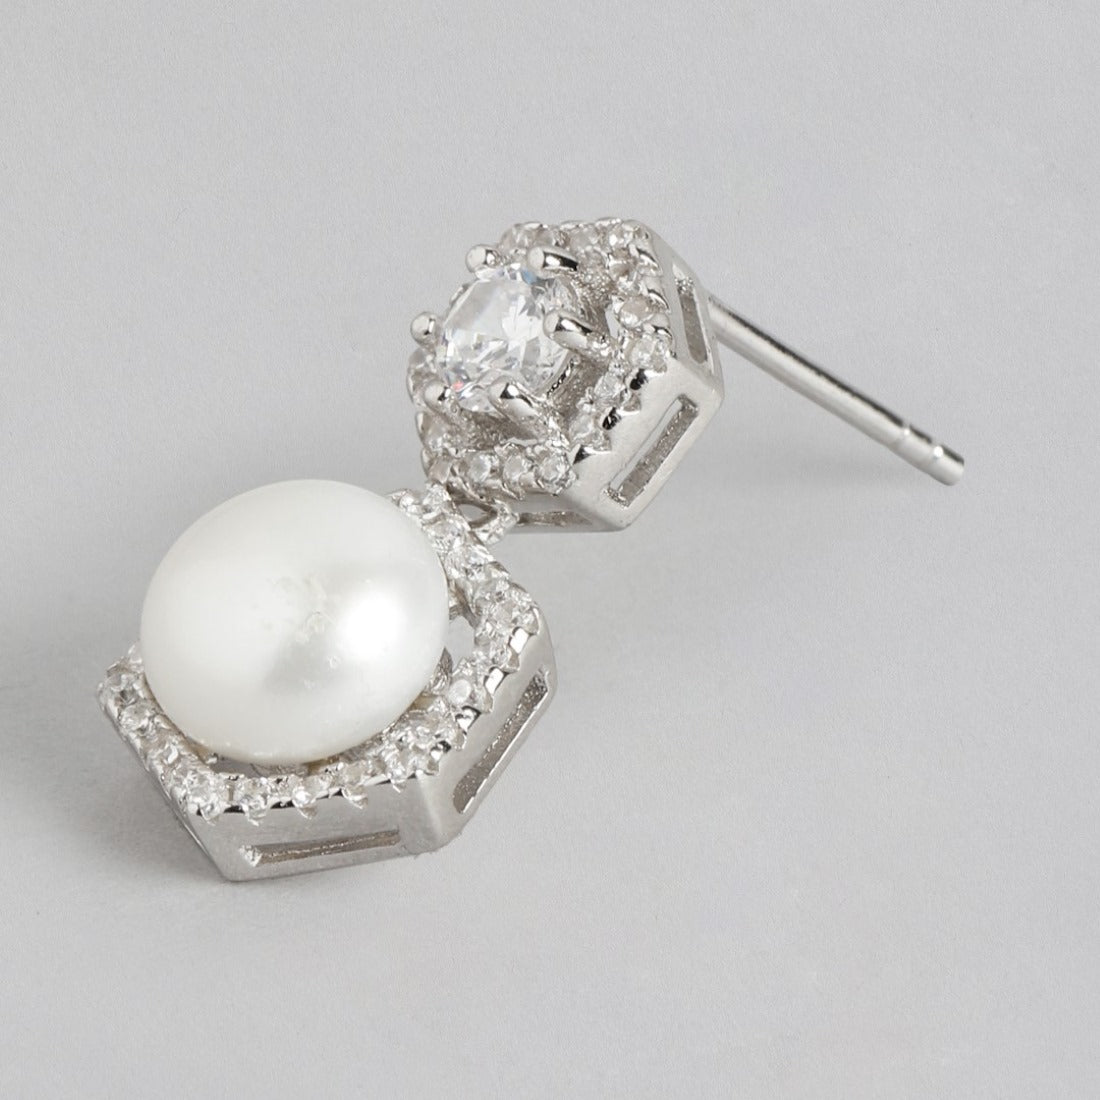 Pearl Elegance Radiance Rhodium-Plated 925 Sterling Silver Earrings